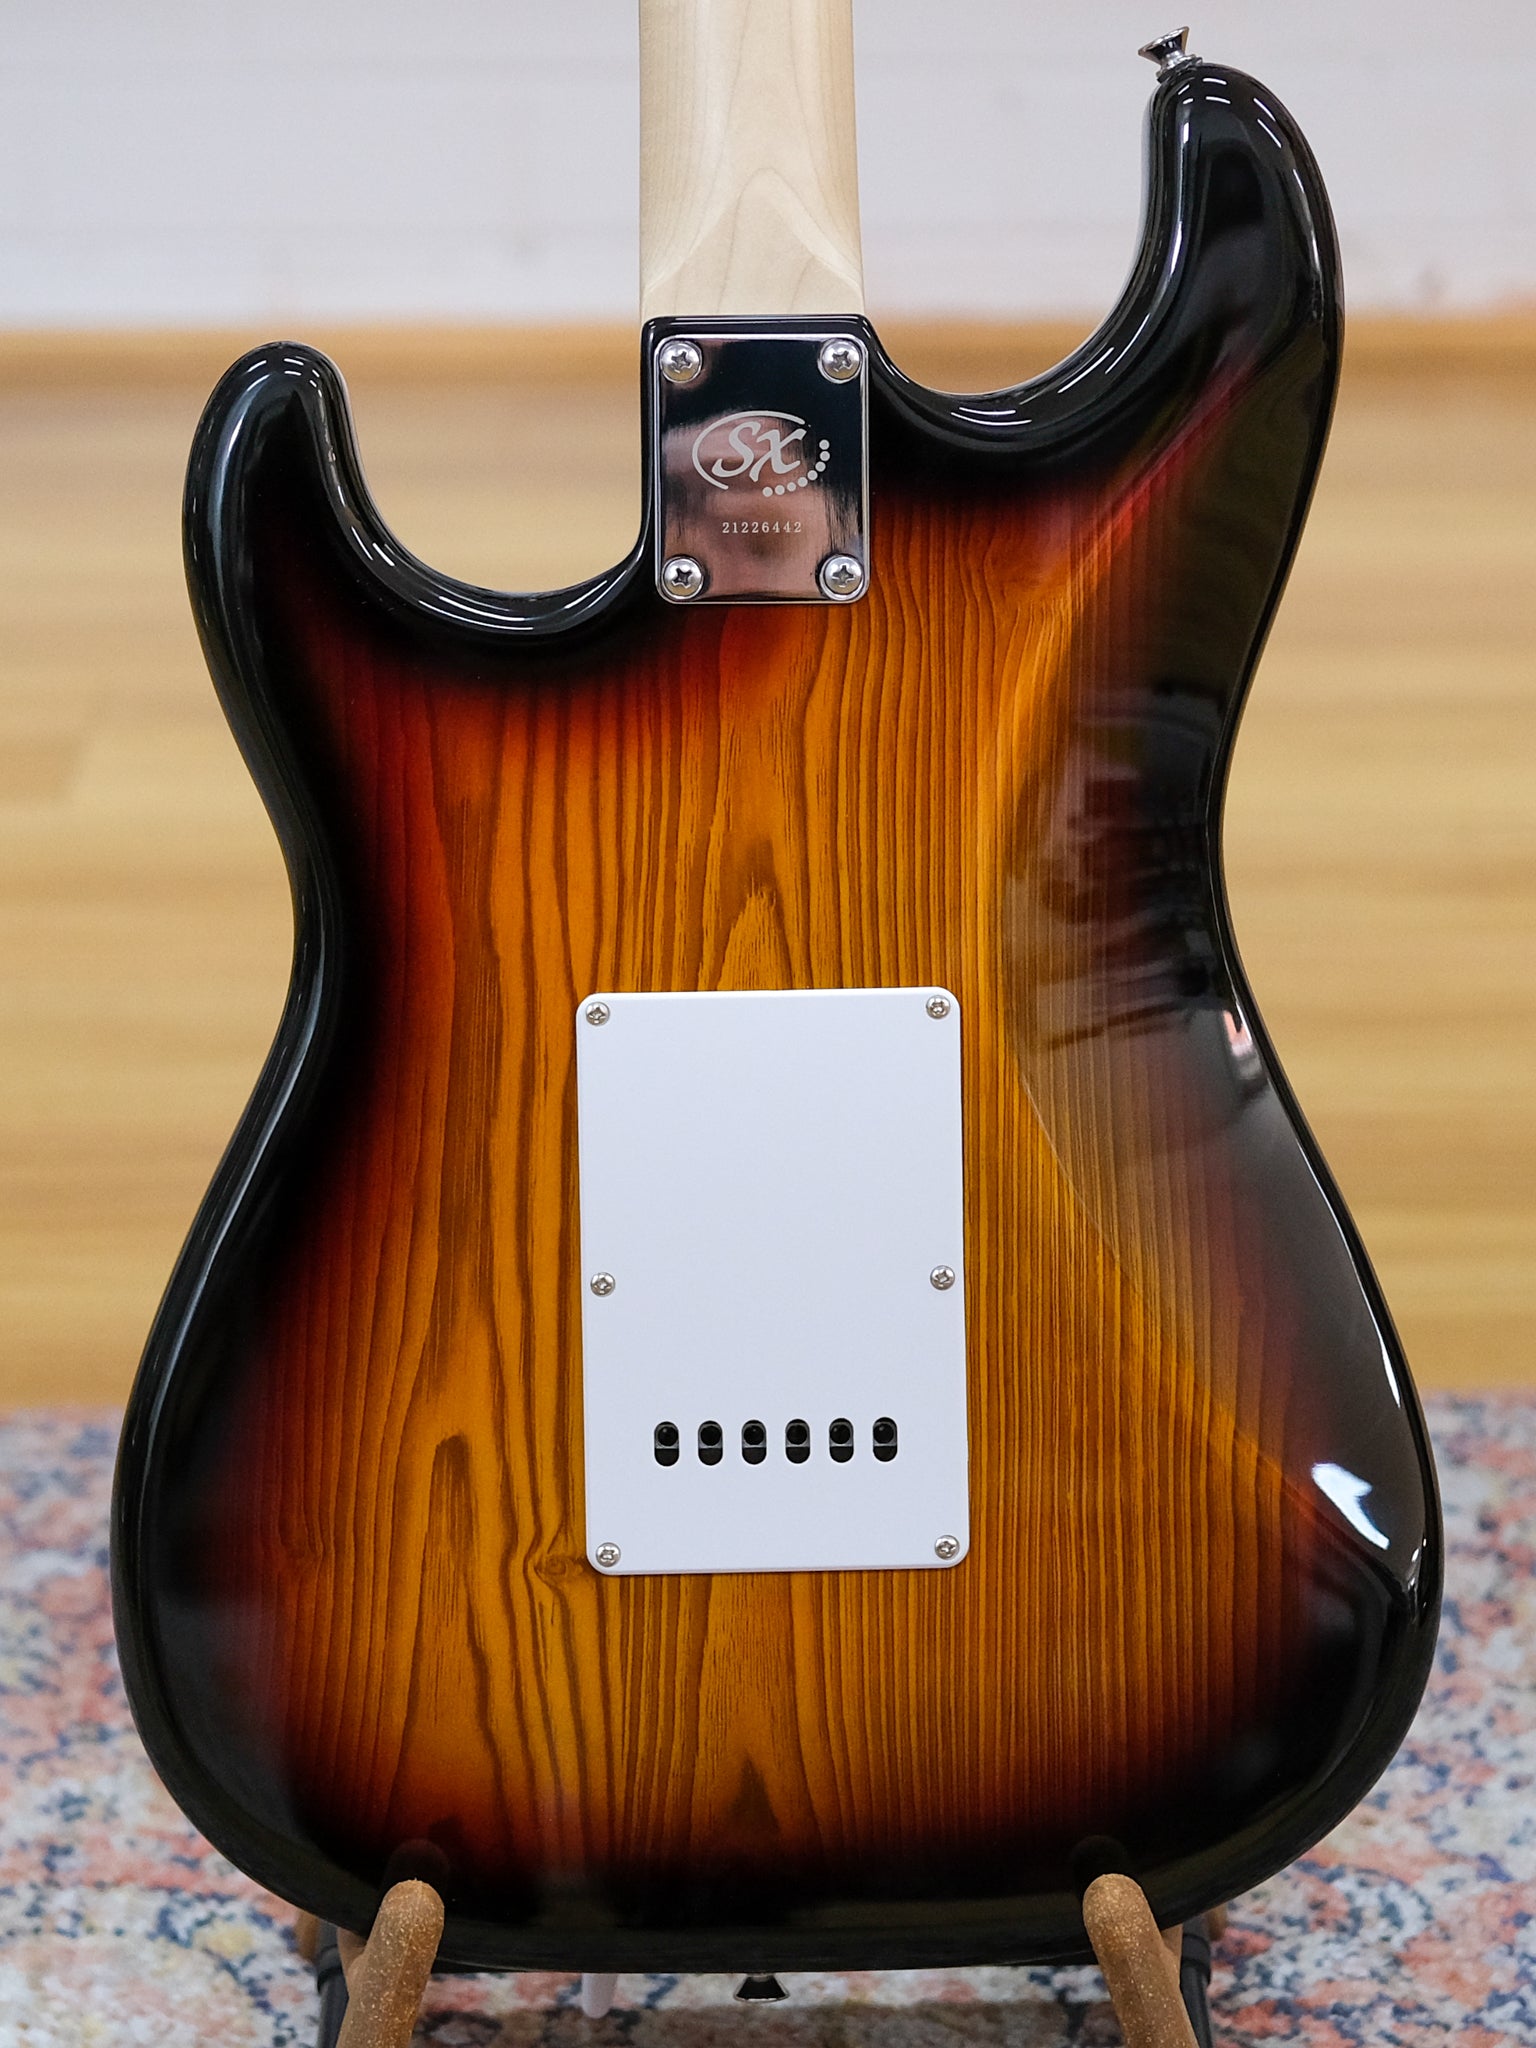 SX SE1 Electric Guitar Pack with Amplifier (Tobacco Sunburst)